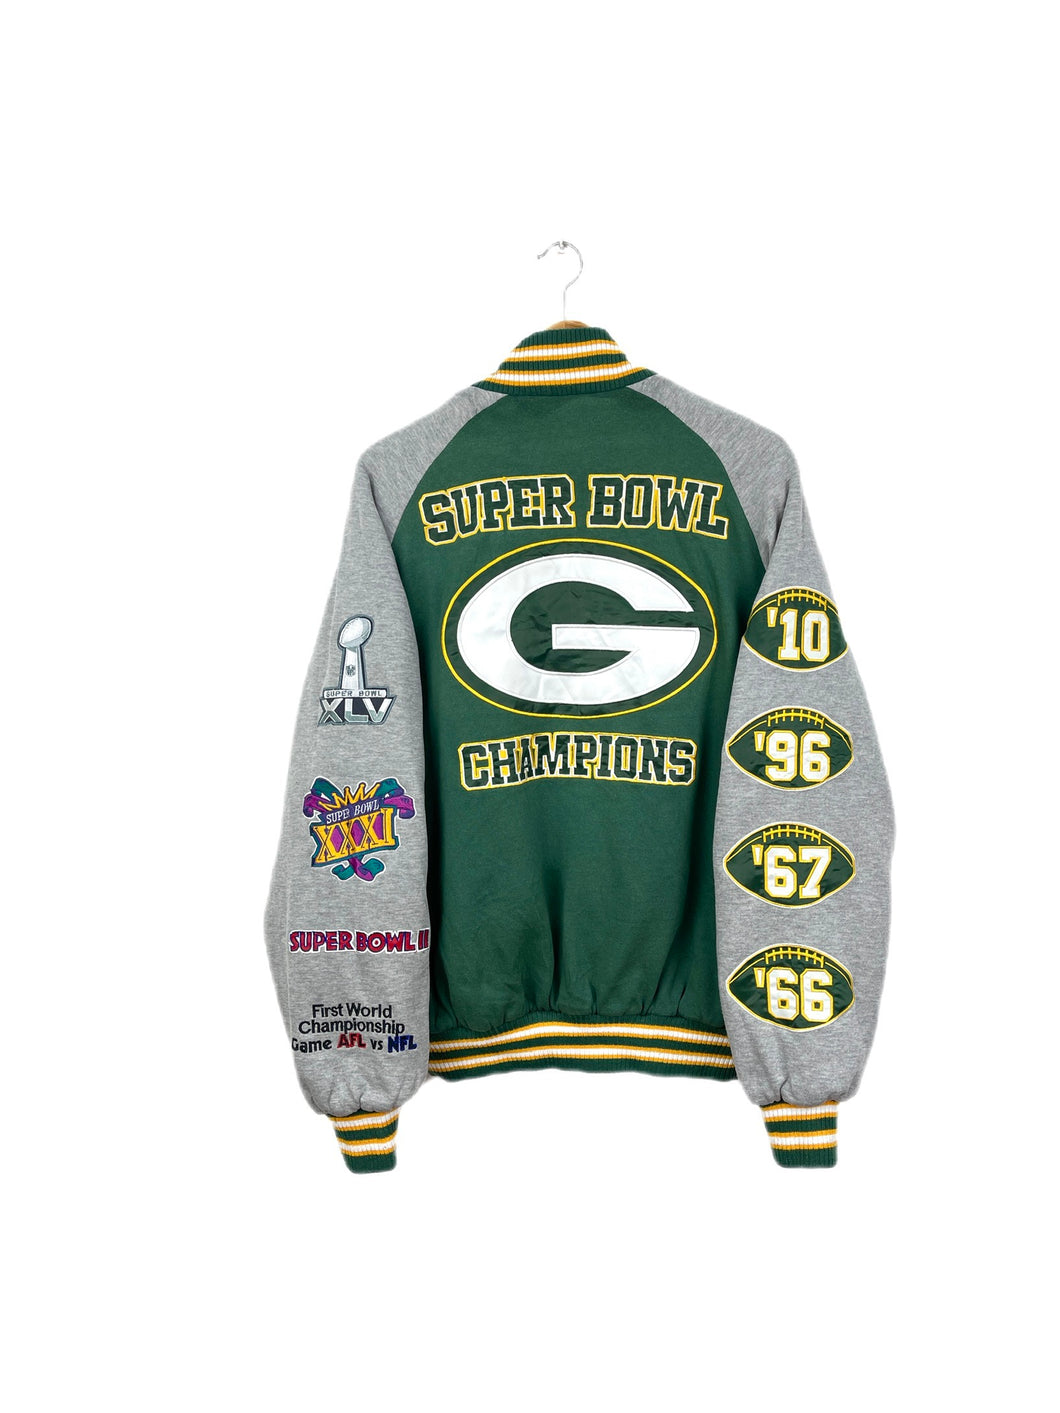 NFL Packers Super Bowl Champions Varsity Jacket - Medium